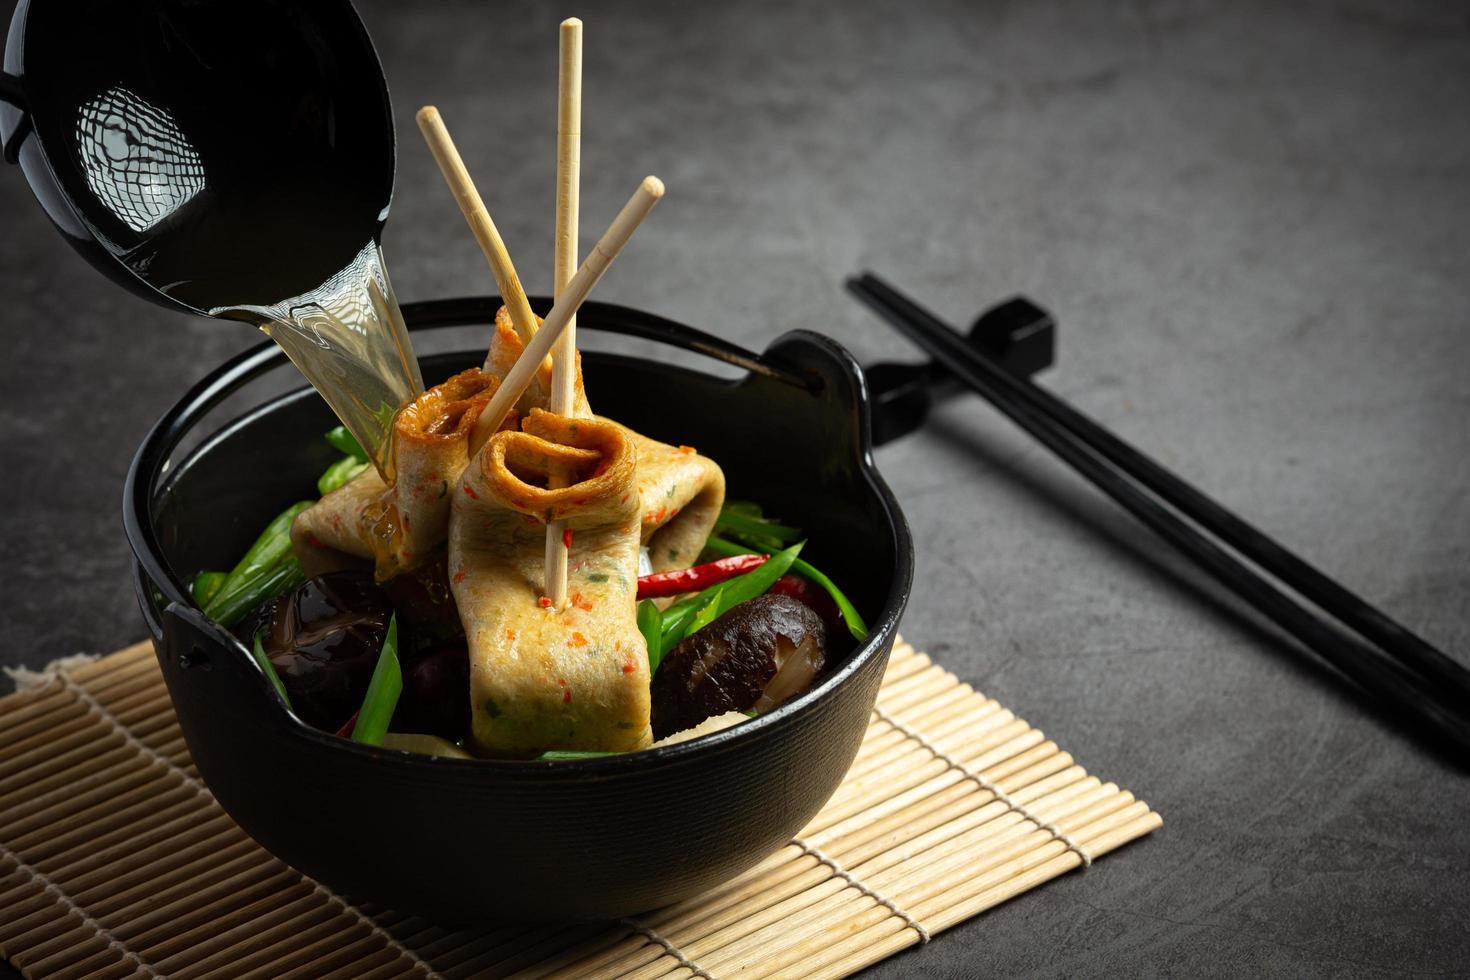 bolo de peixe coreano e sopa de legumes na mesa foto